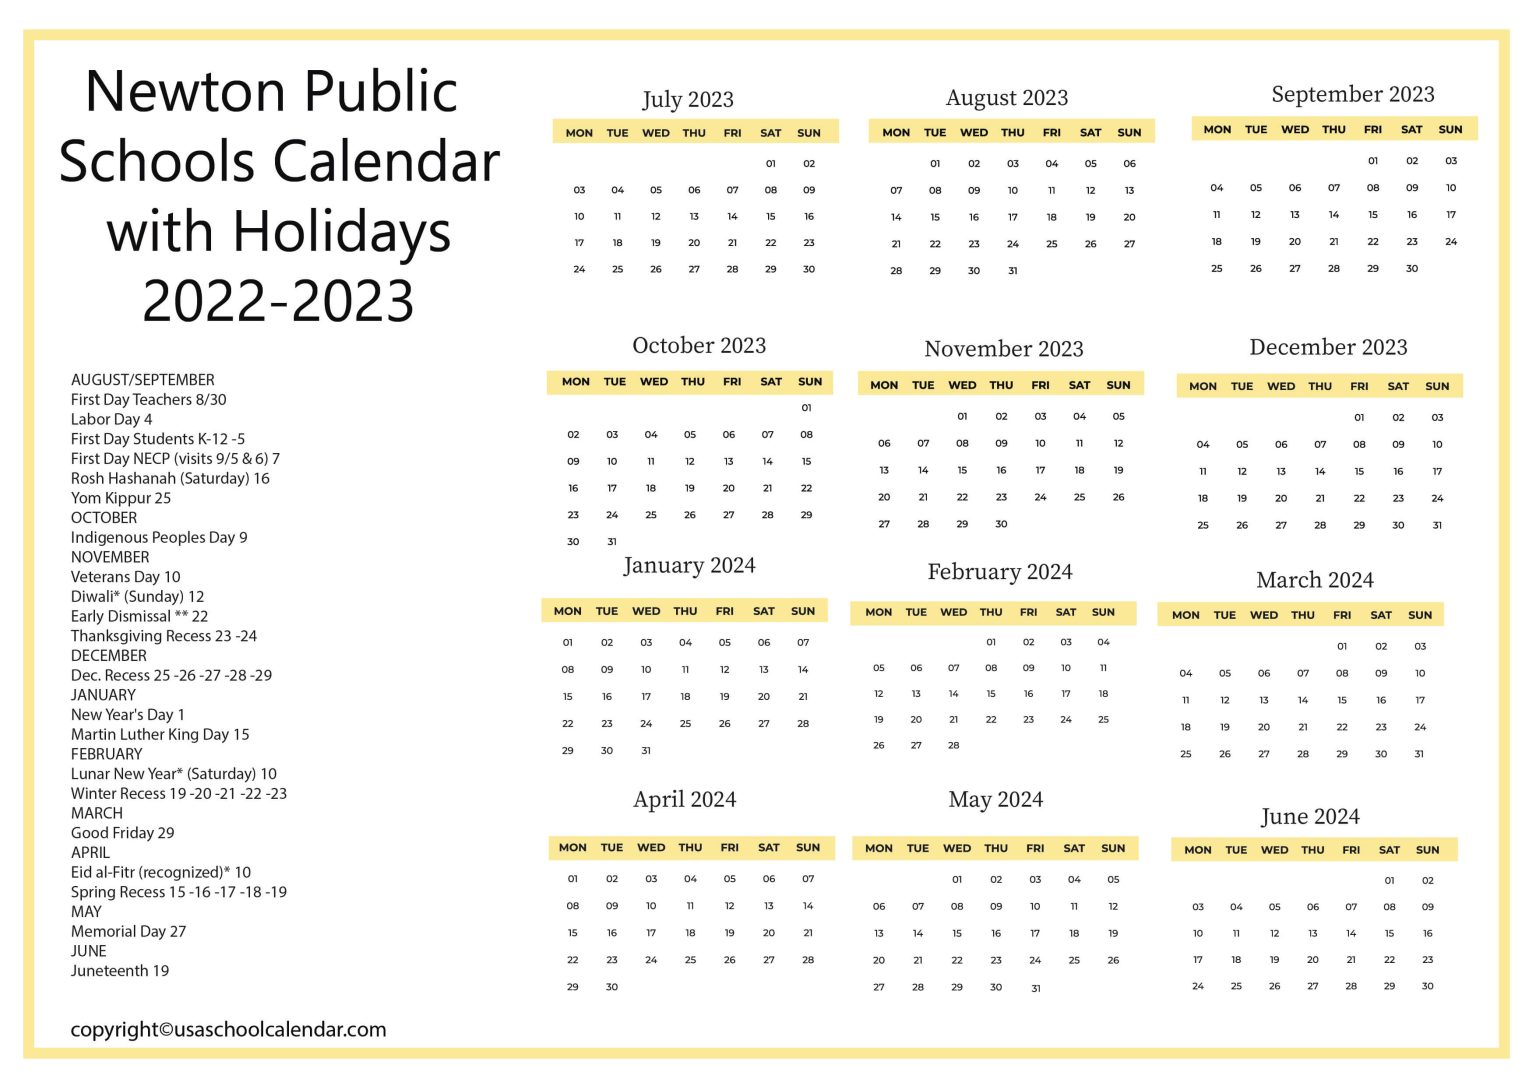 Newton Public Schools Calendar with Holidays 20232024